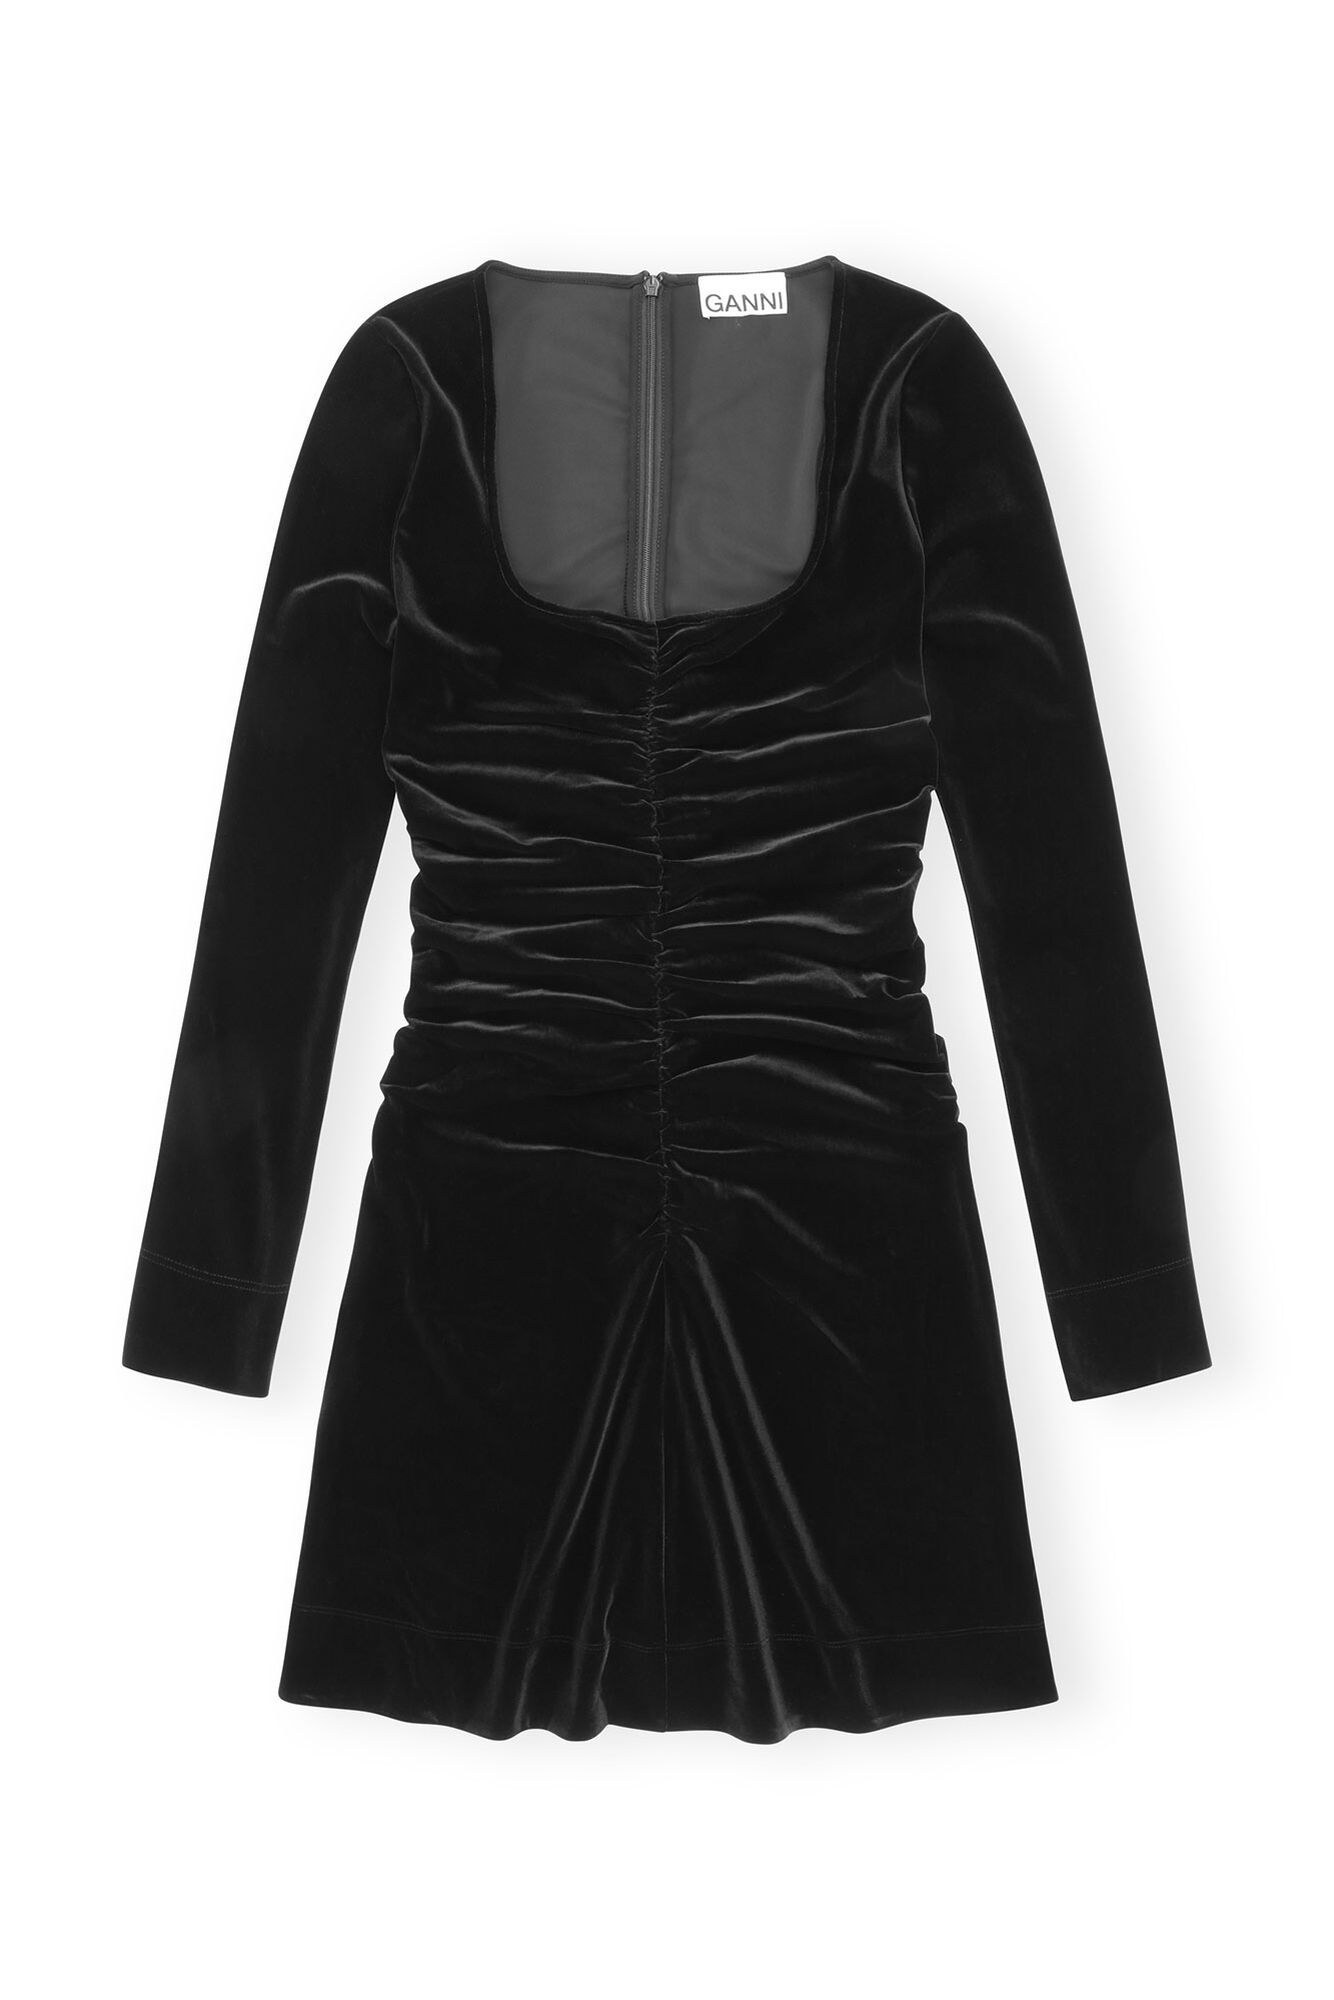 LEO BOUTIQUE Velvet Jersey Mini Dress Black GANNI